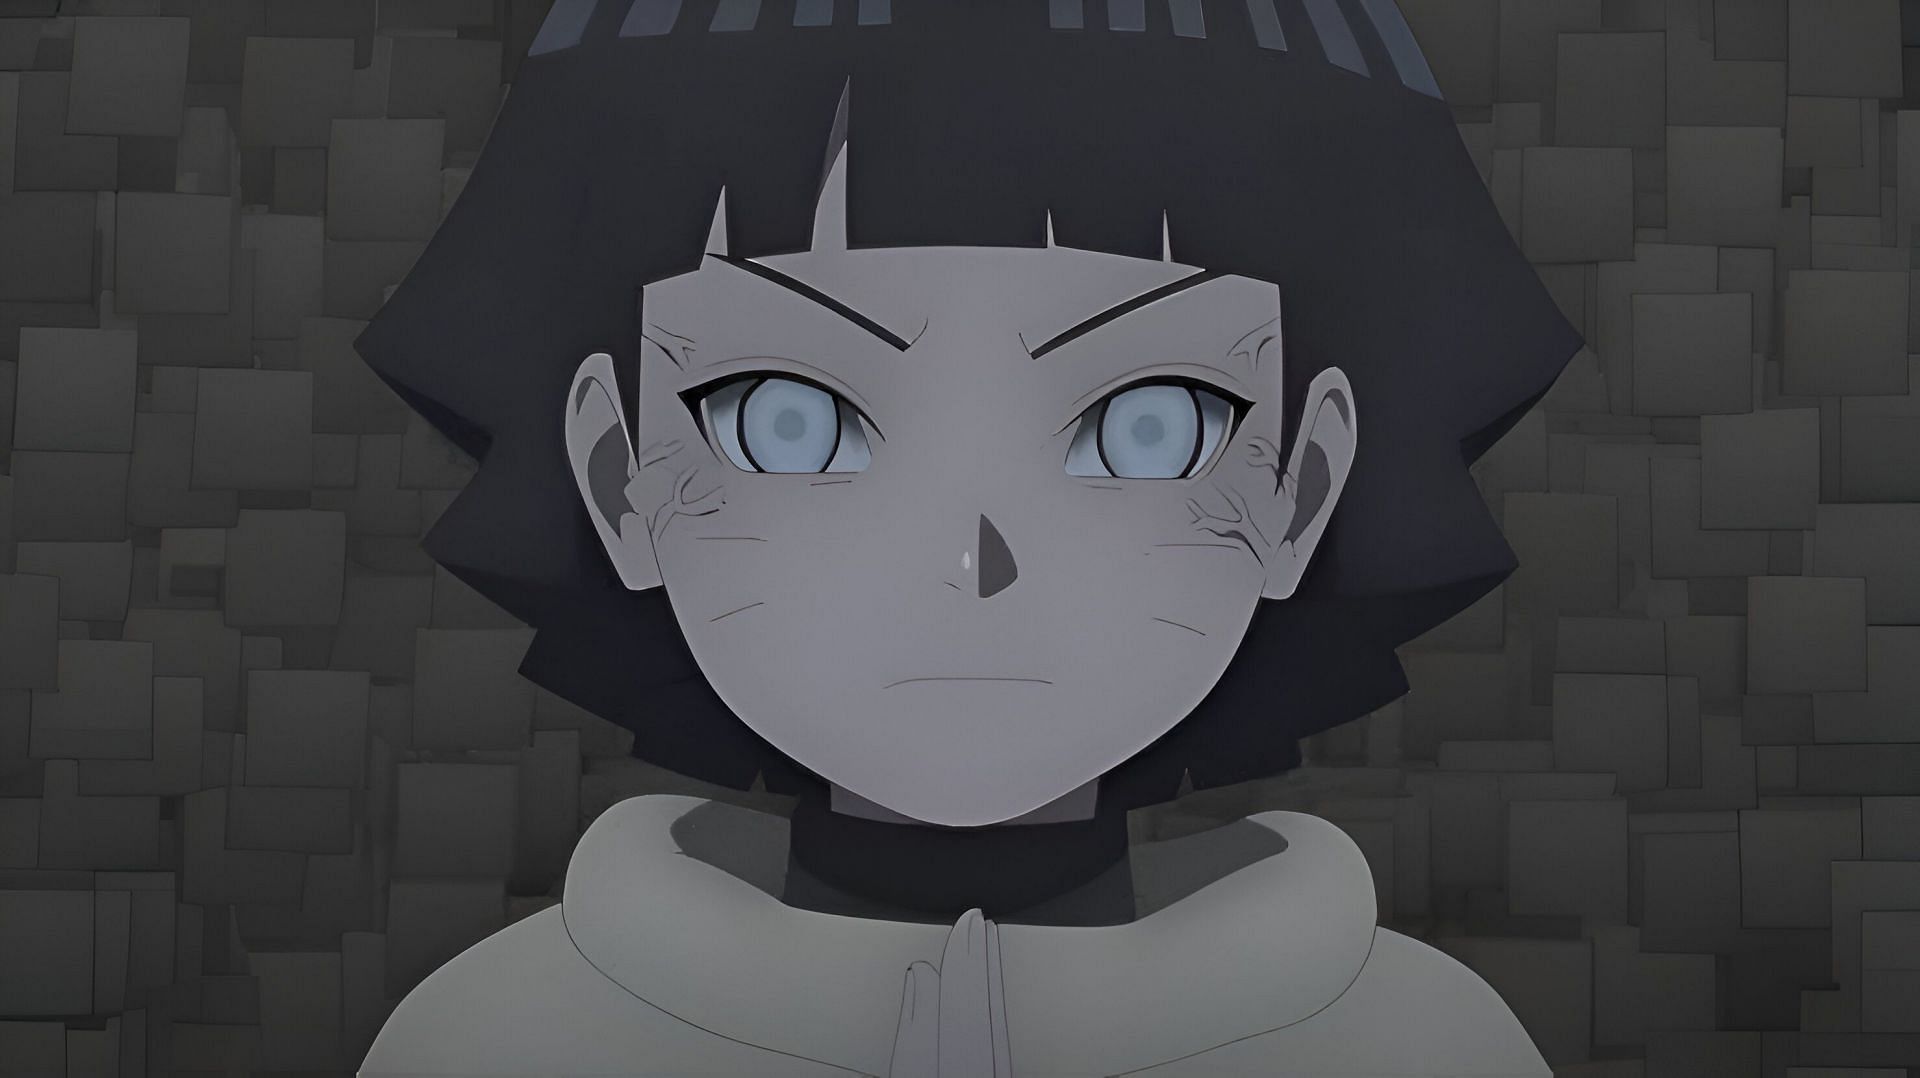 Himawari as seen in the anime (Image via Studio Pierrot)